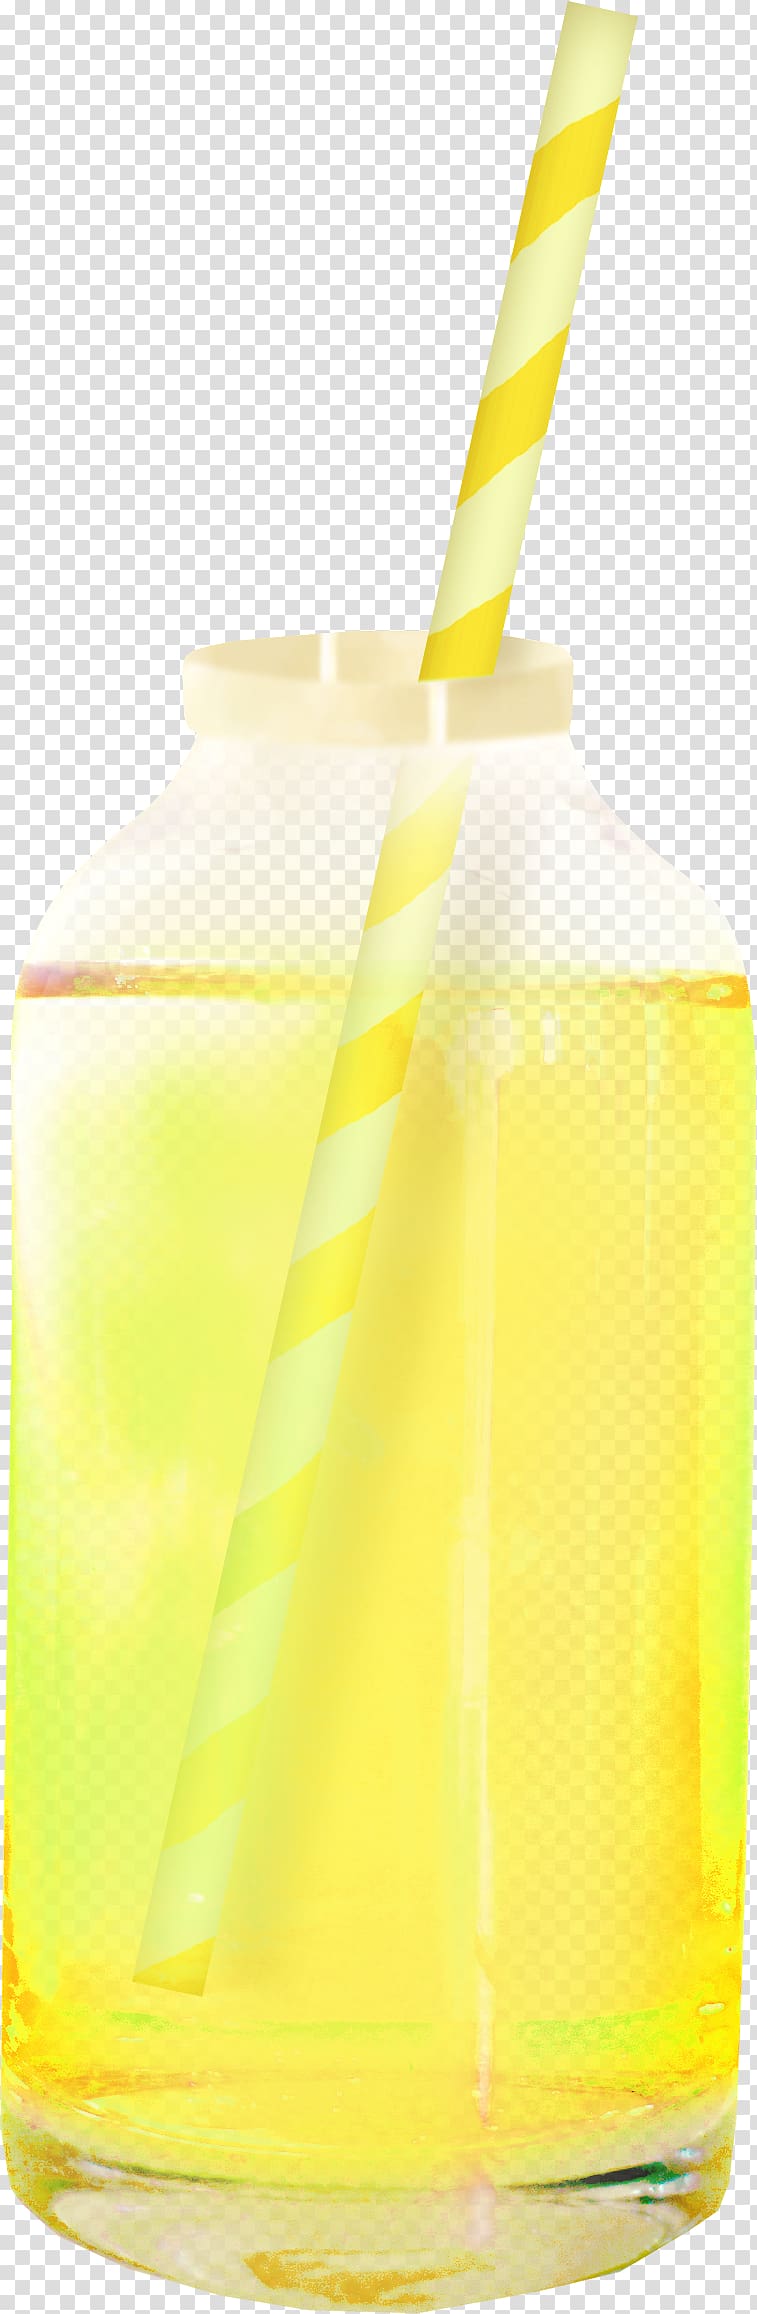 Harvey Wallbanger Juice Orange drink Lemonade Non-alcoholic drink, Creative orange drink cup transparent background PNG clipart